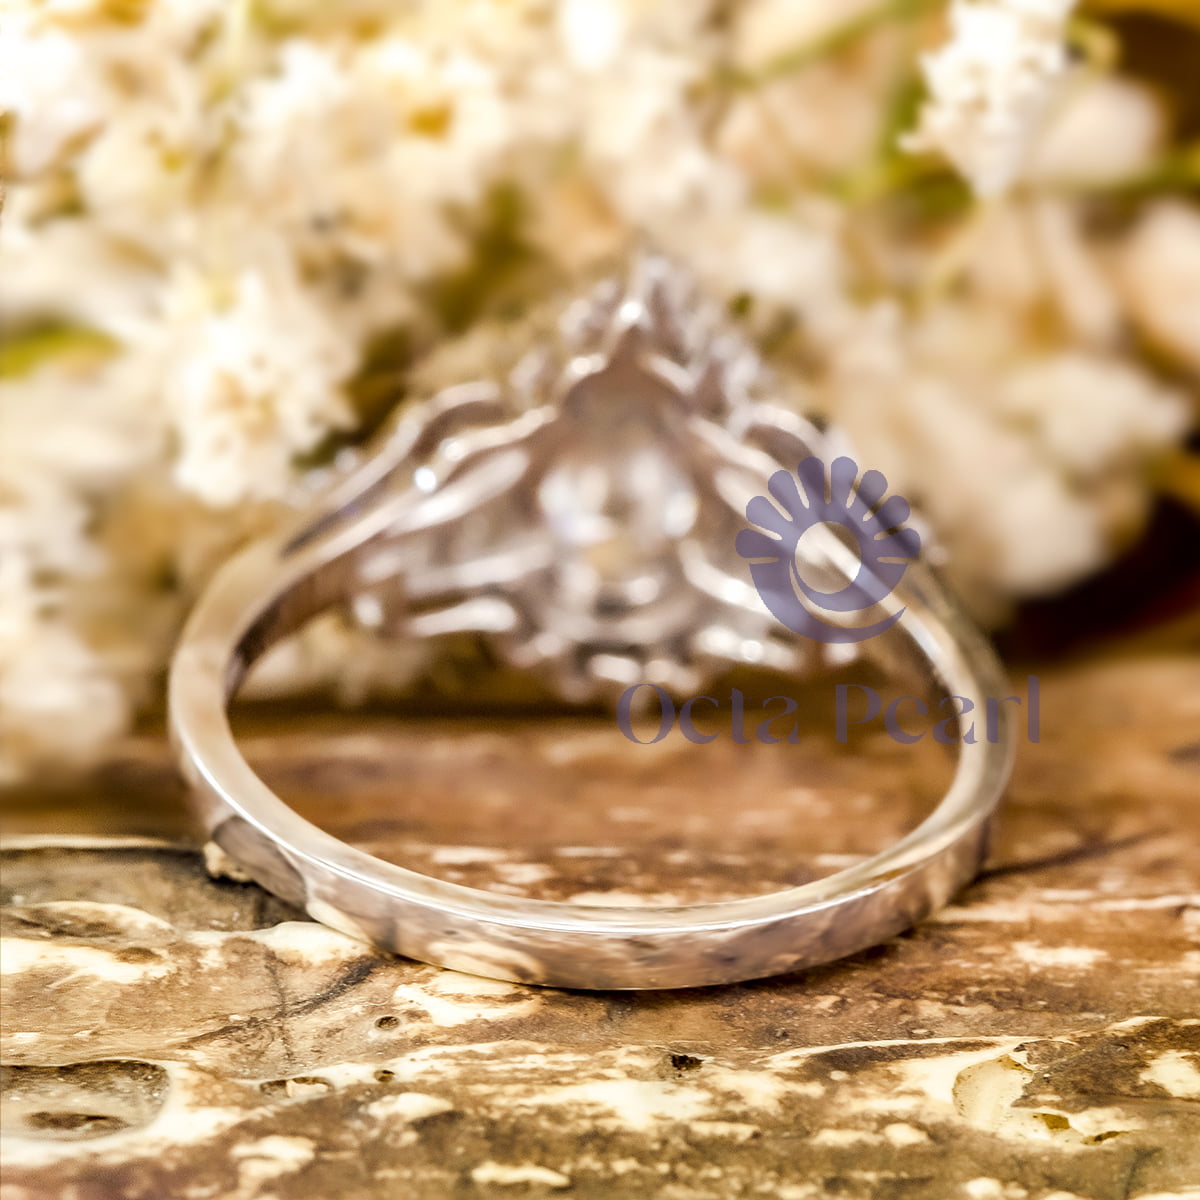 Pear & Baguette Cut CZ Stone V Shape Channel Setting Wedding Bridal Ring